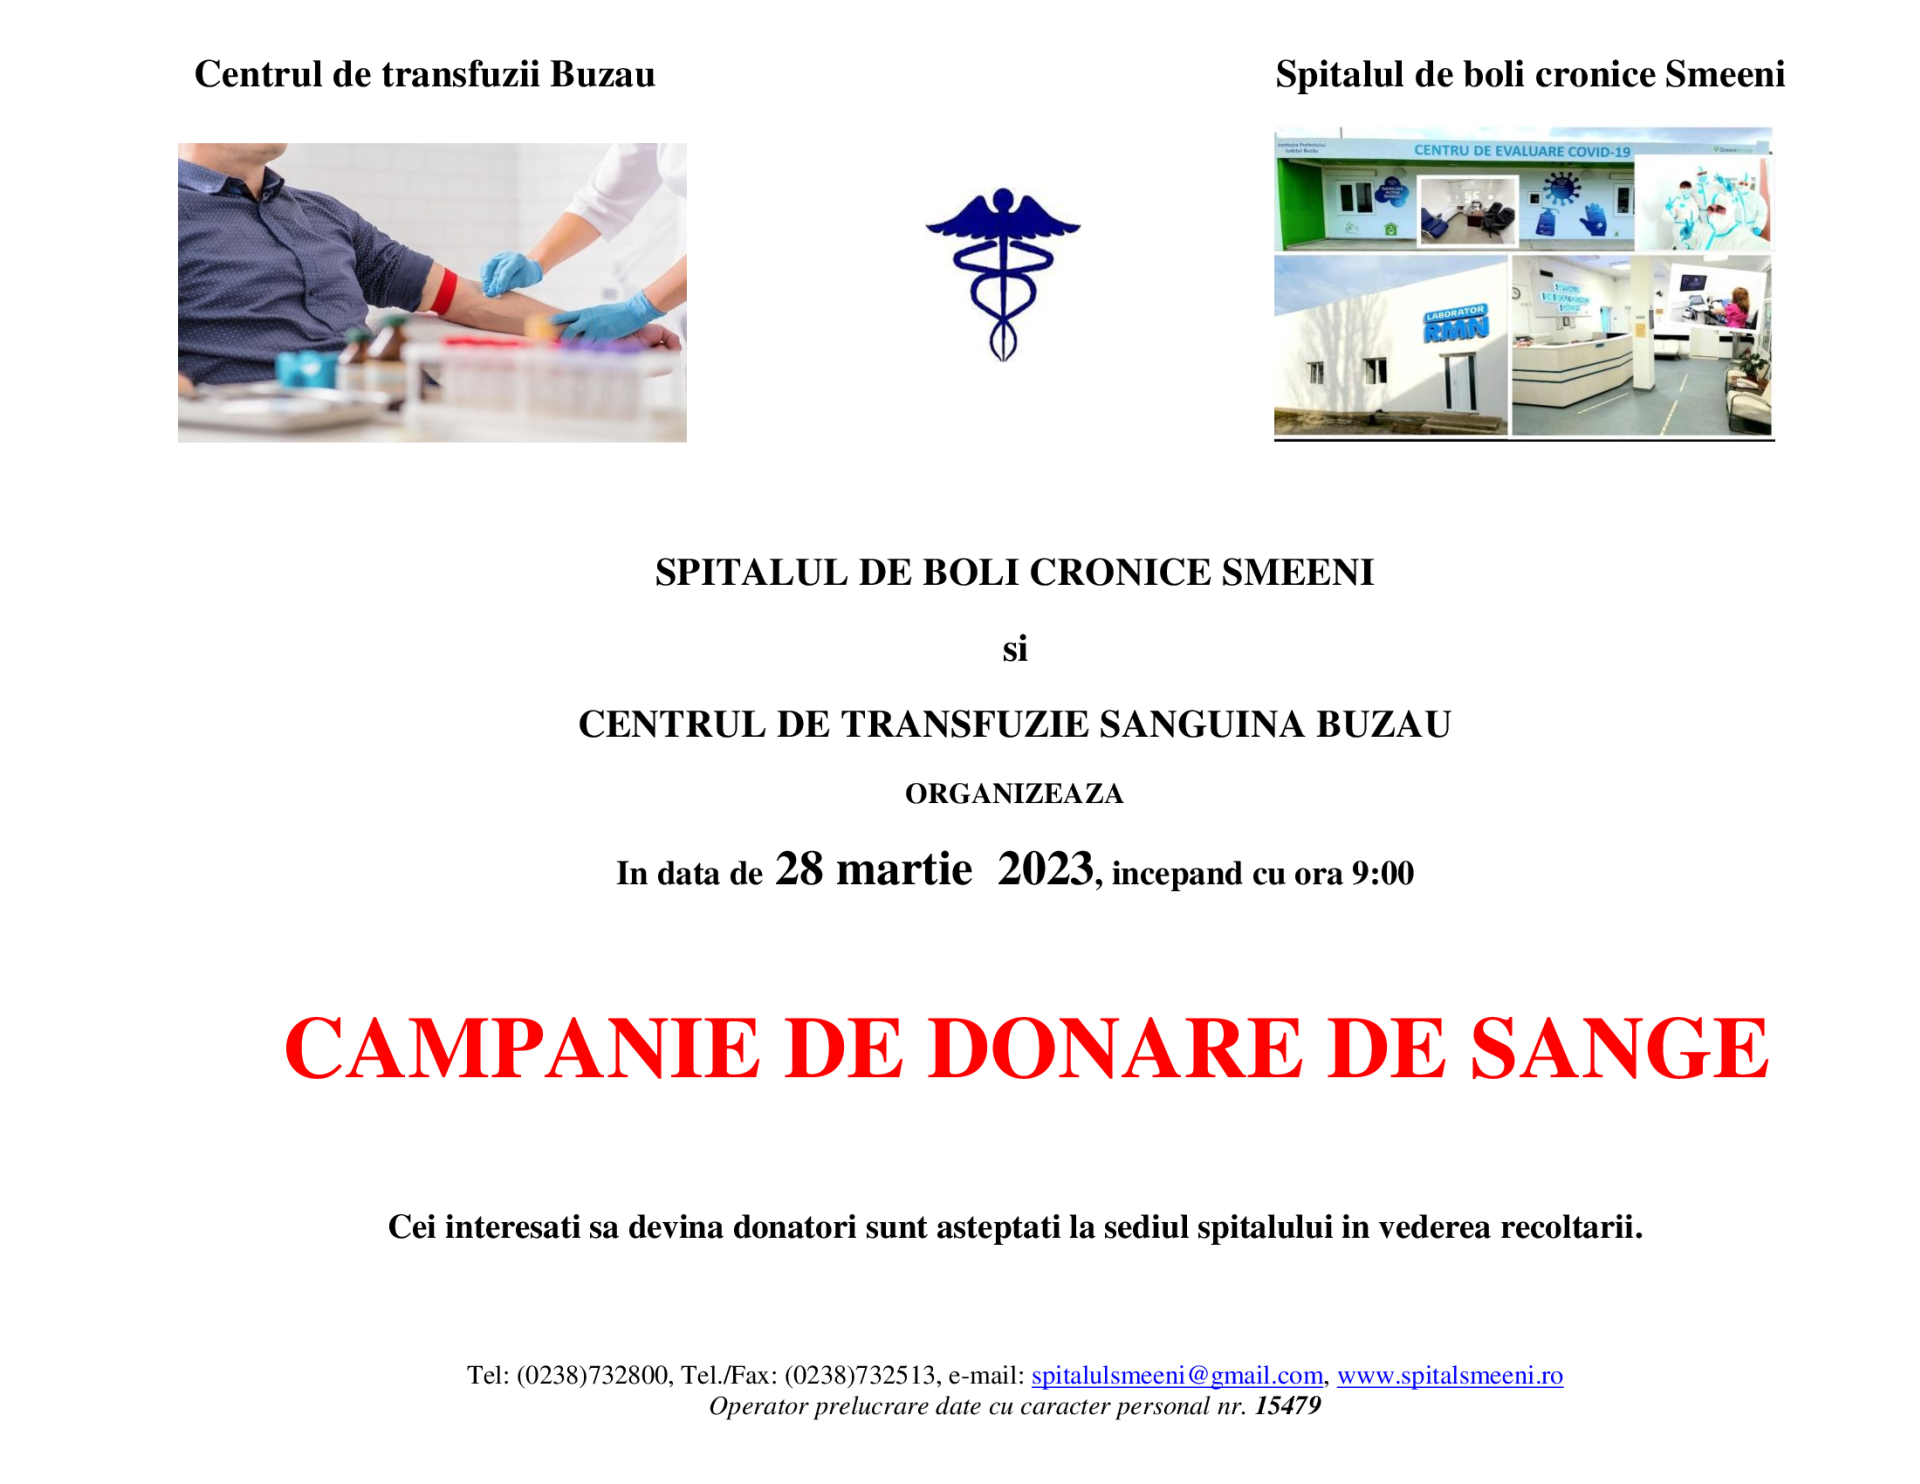 Campanie de colecta mobila (donare de sange)